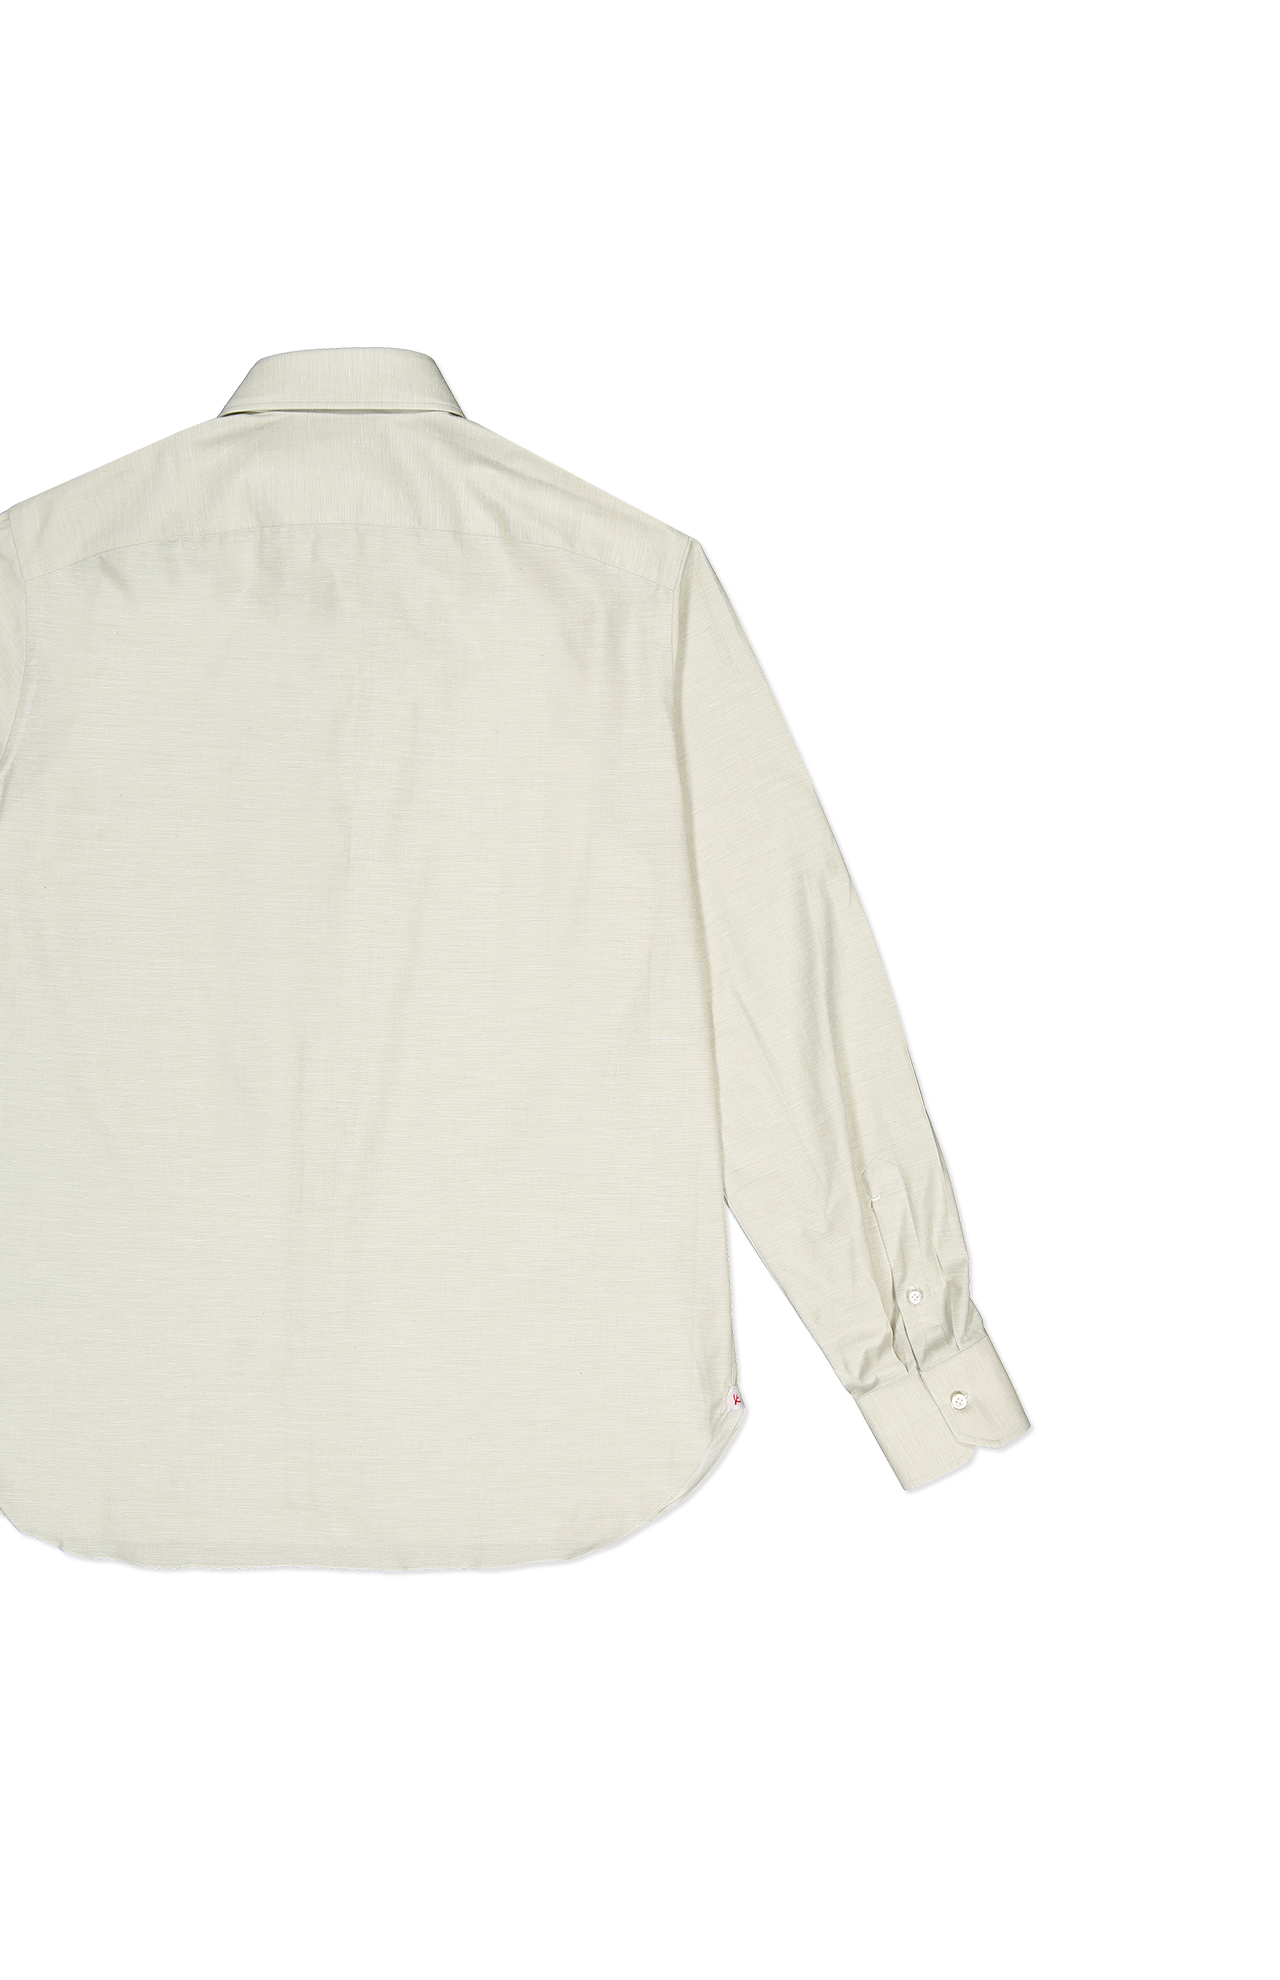 Isaia Solid Dress Shirt Cotton Silk Light Grey Back Flat Lay Image (7018825646195)